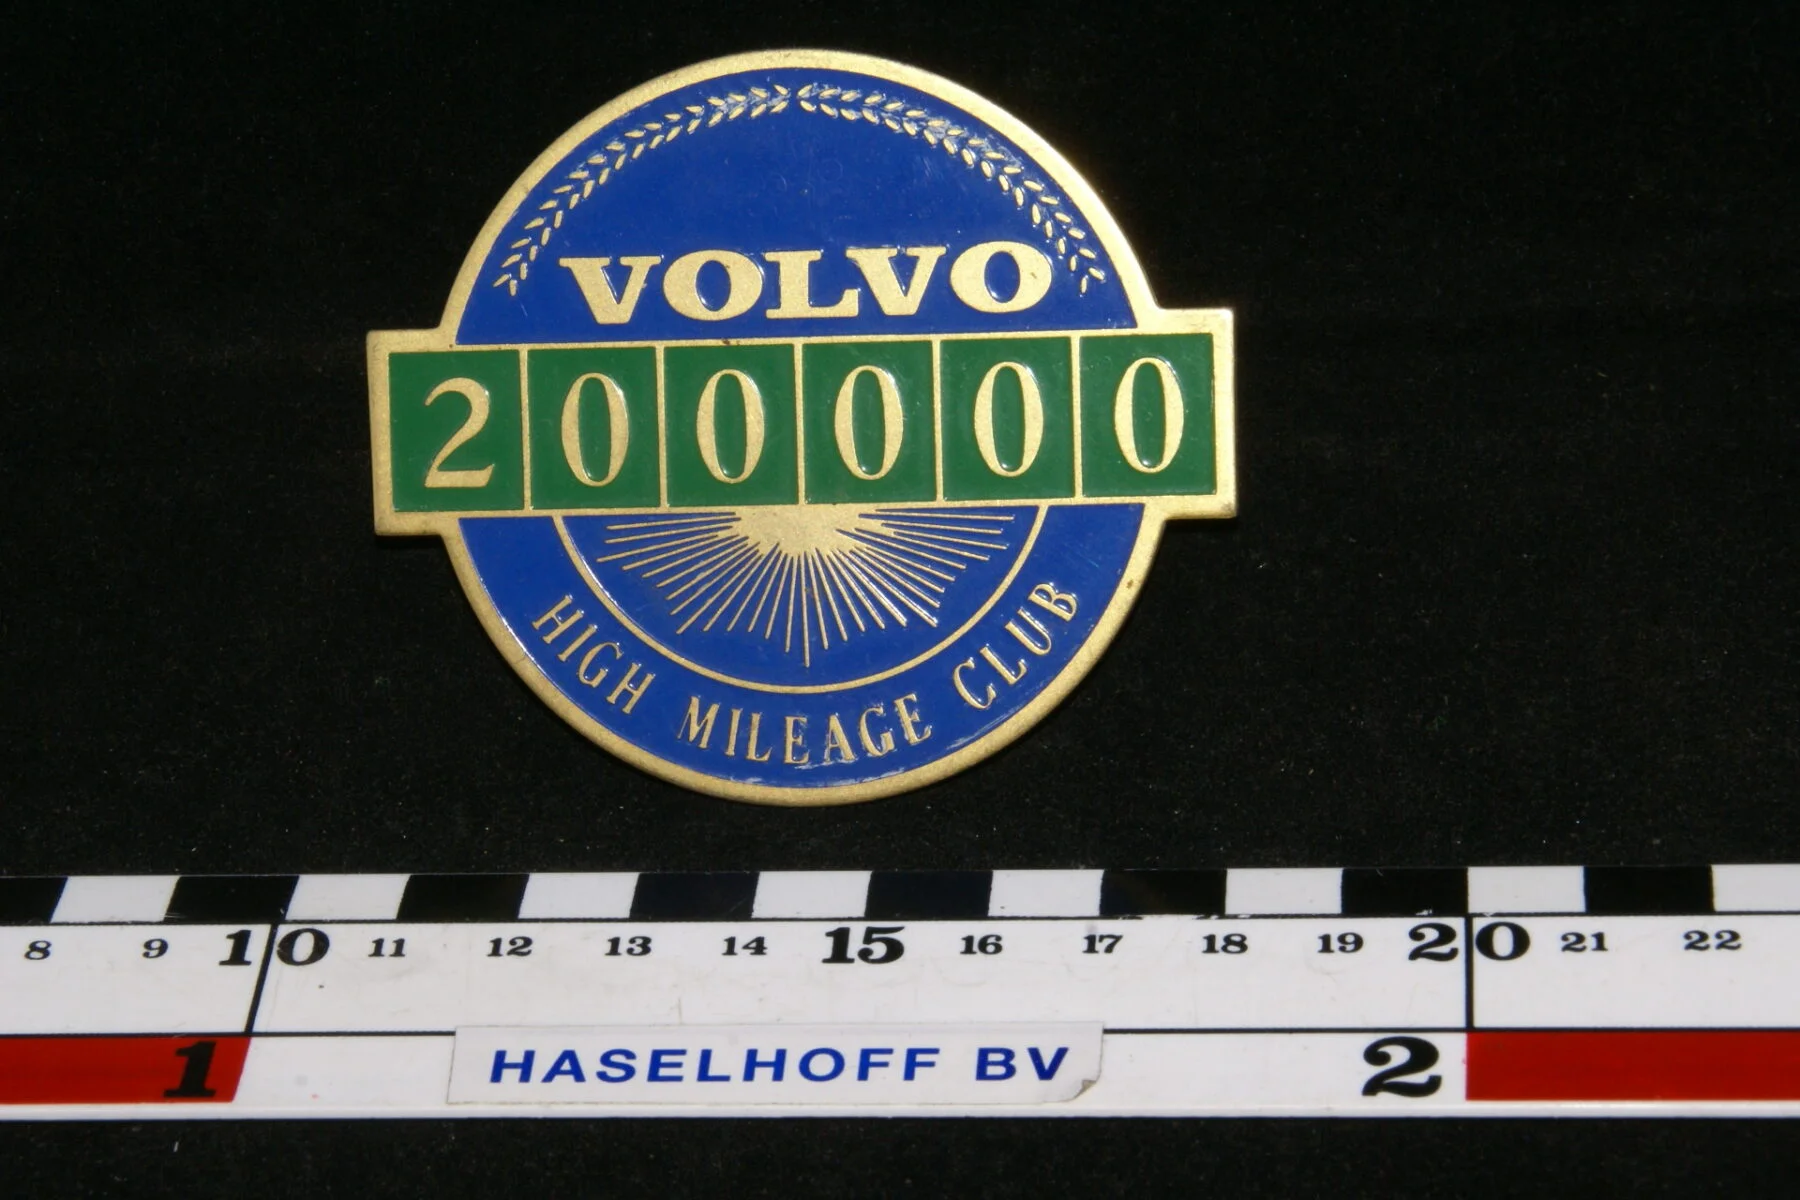 badge VOLVO 200000 HIGH MILEAGE CLUB 141100-0717-0